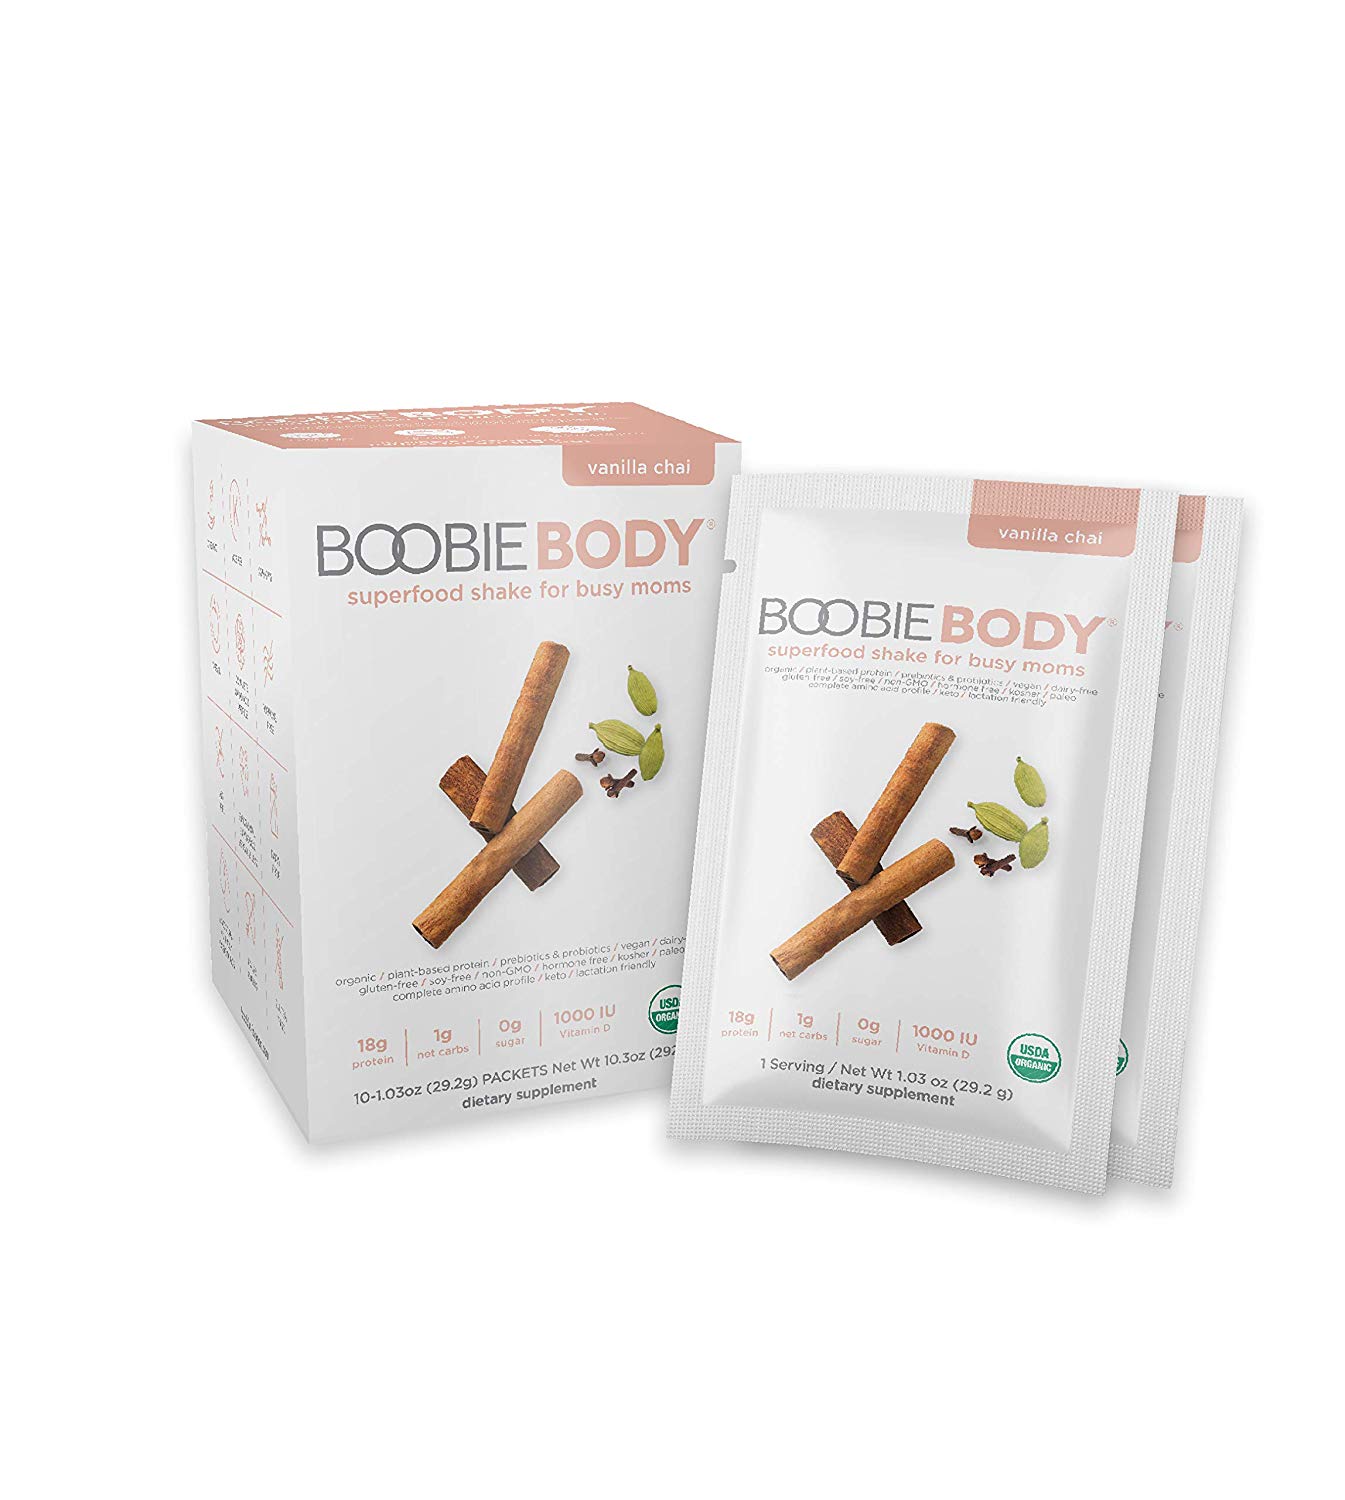 Protein Shaker Bottle with Storage | Boobie Body Shaker Bottle from Boobie Superfoods